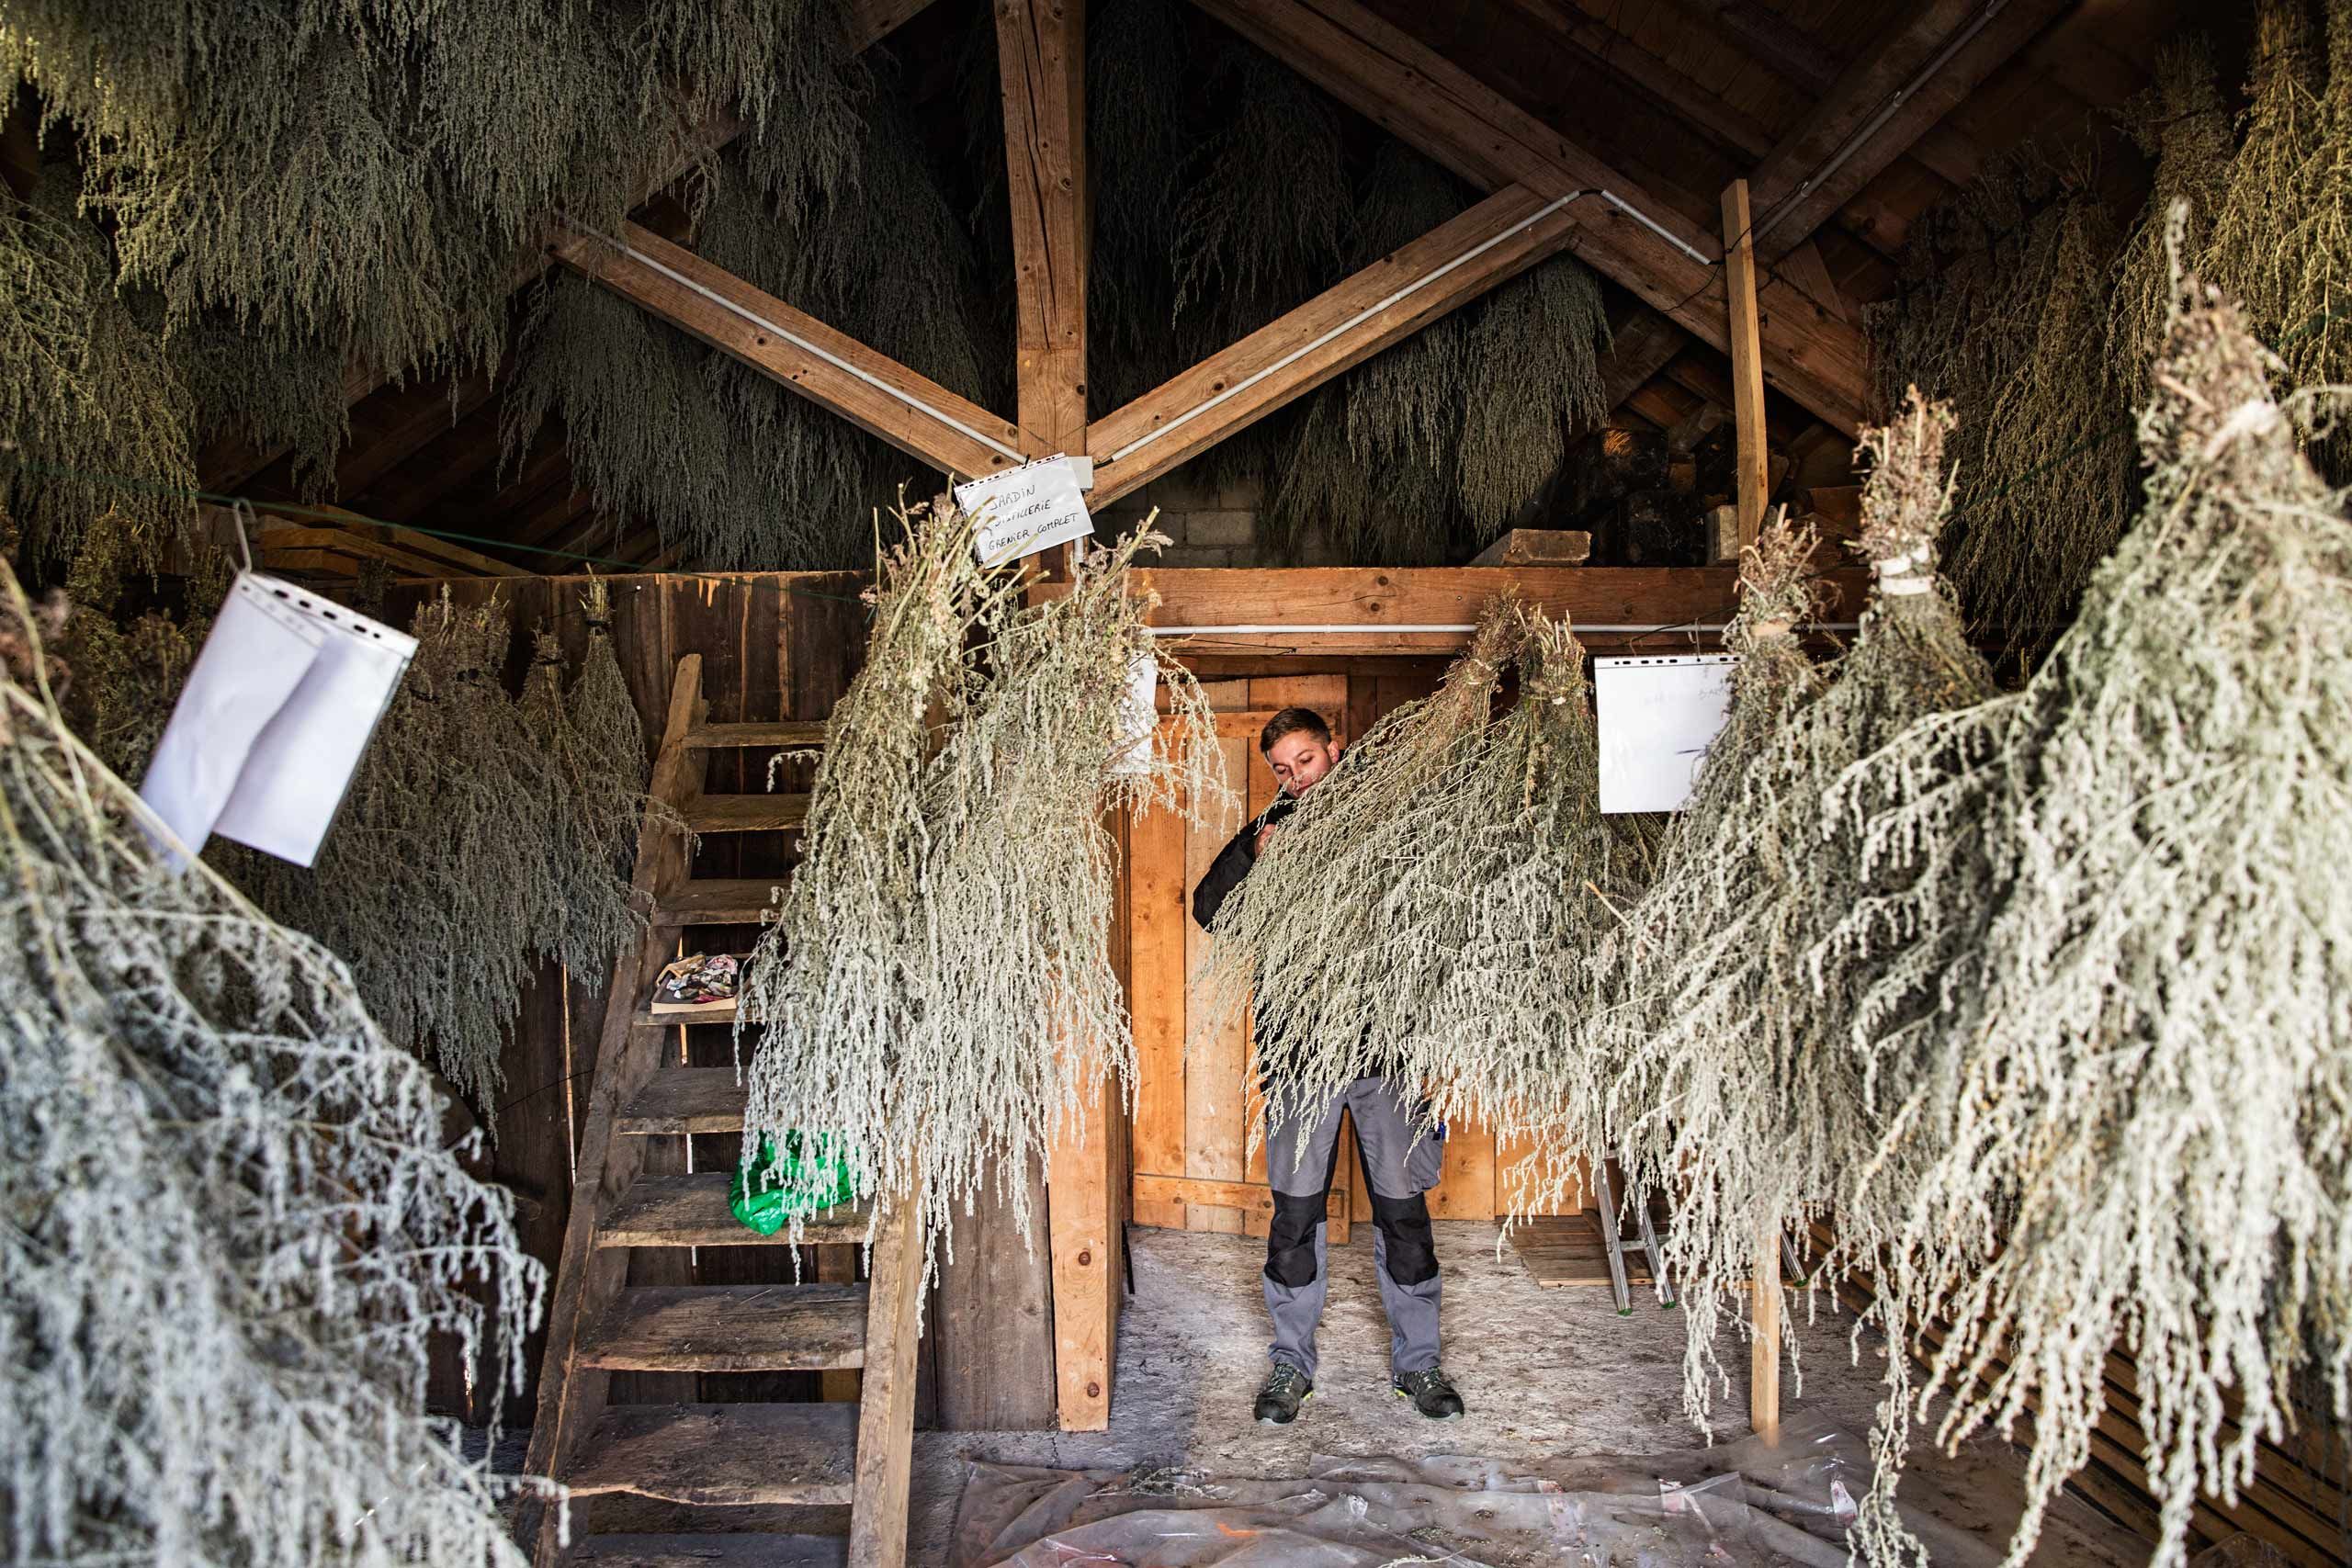 Pierre Guy Inside a Barn Full of Drying Absinthe Plants